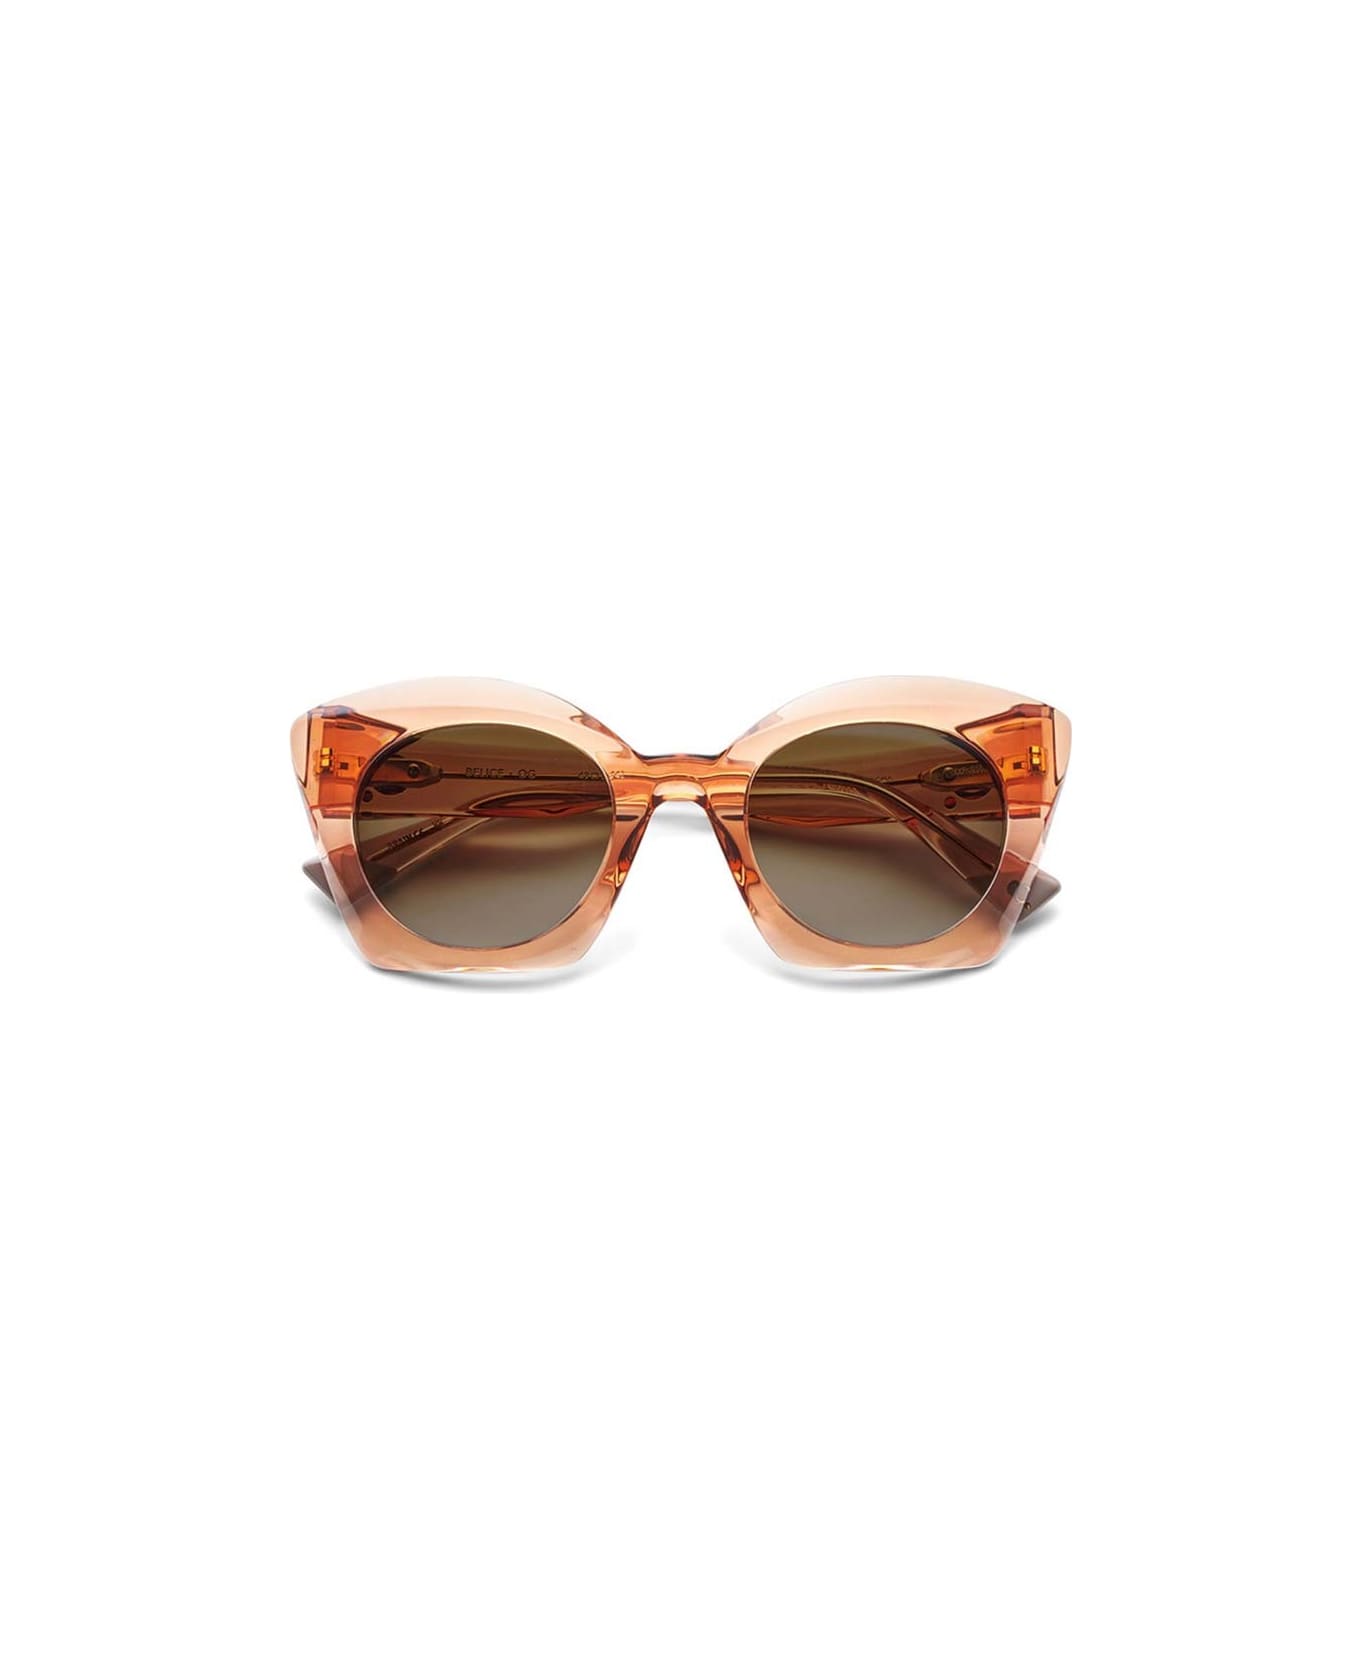 Etnia Barcelona Sunglasses - Arancione/Marrone サングラス